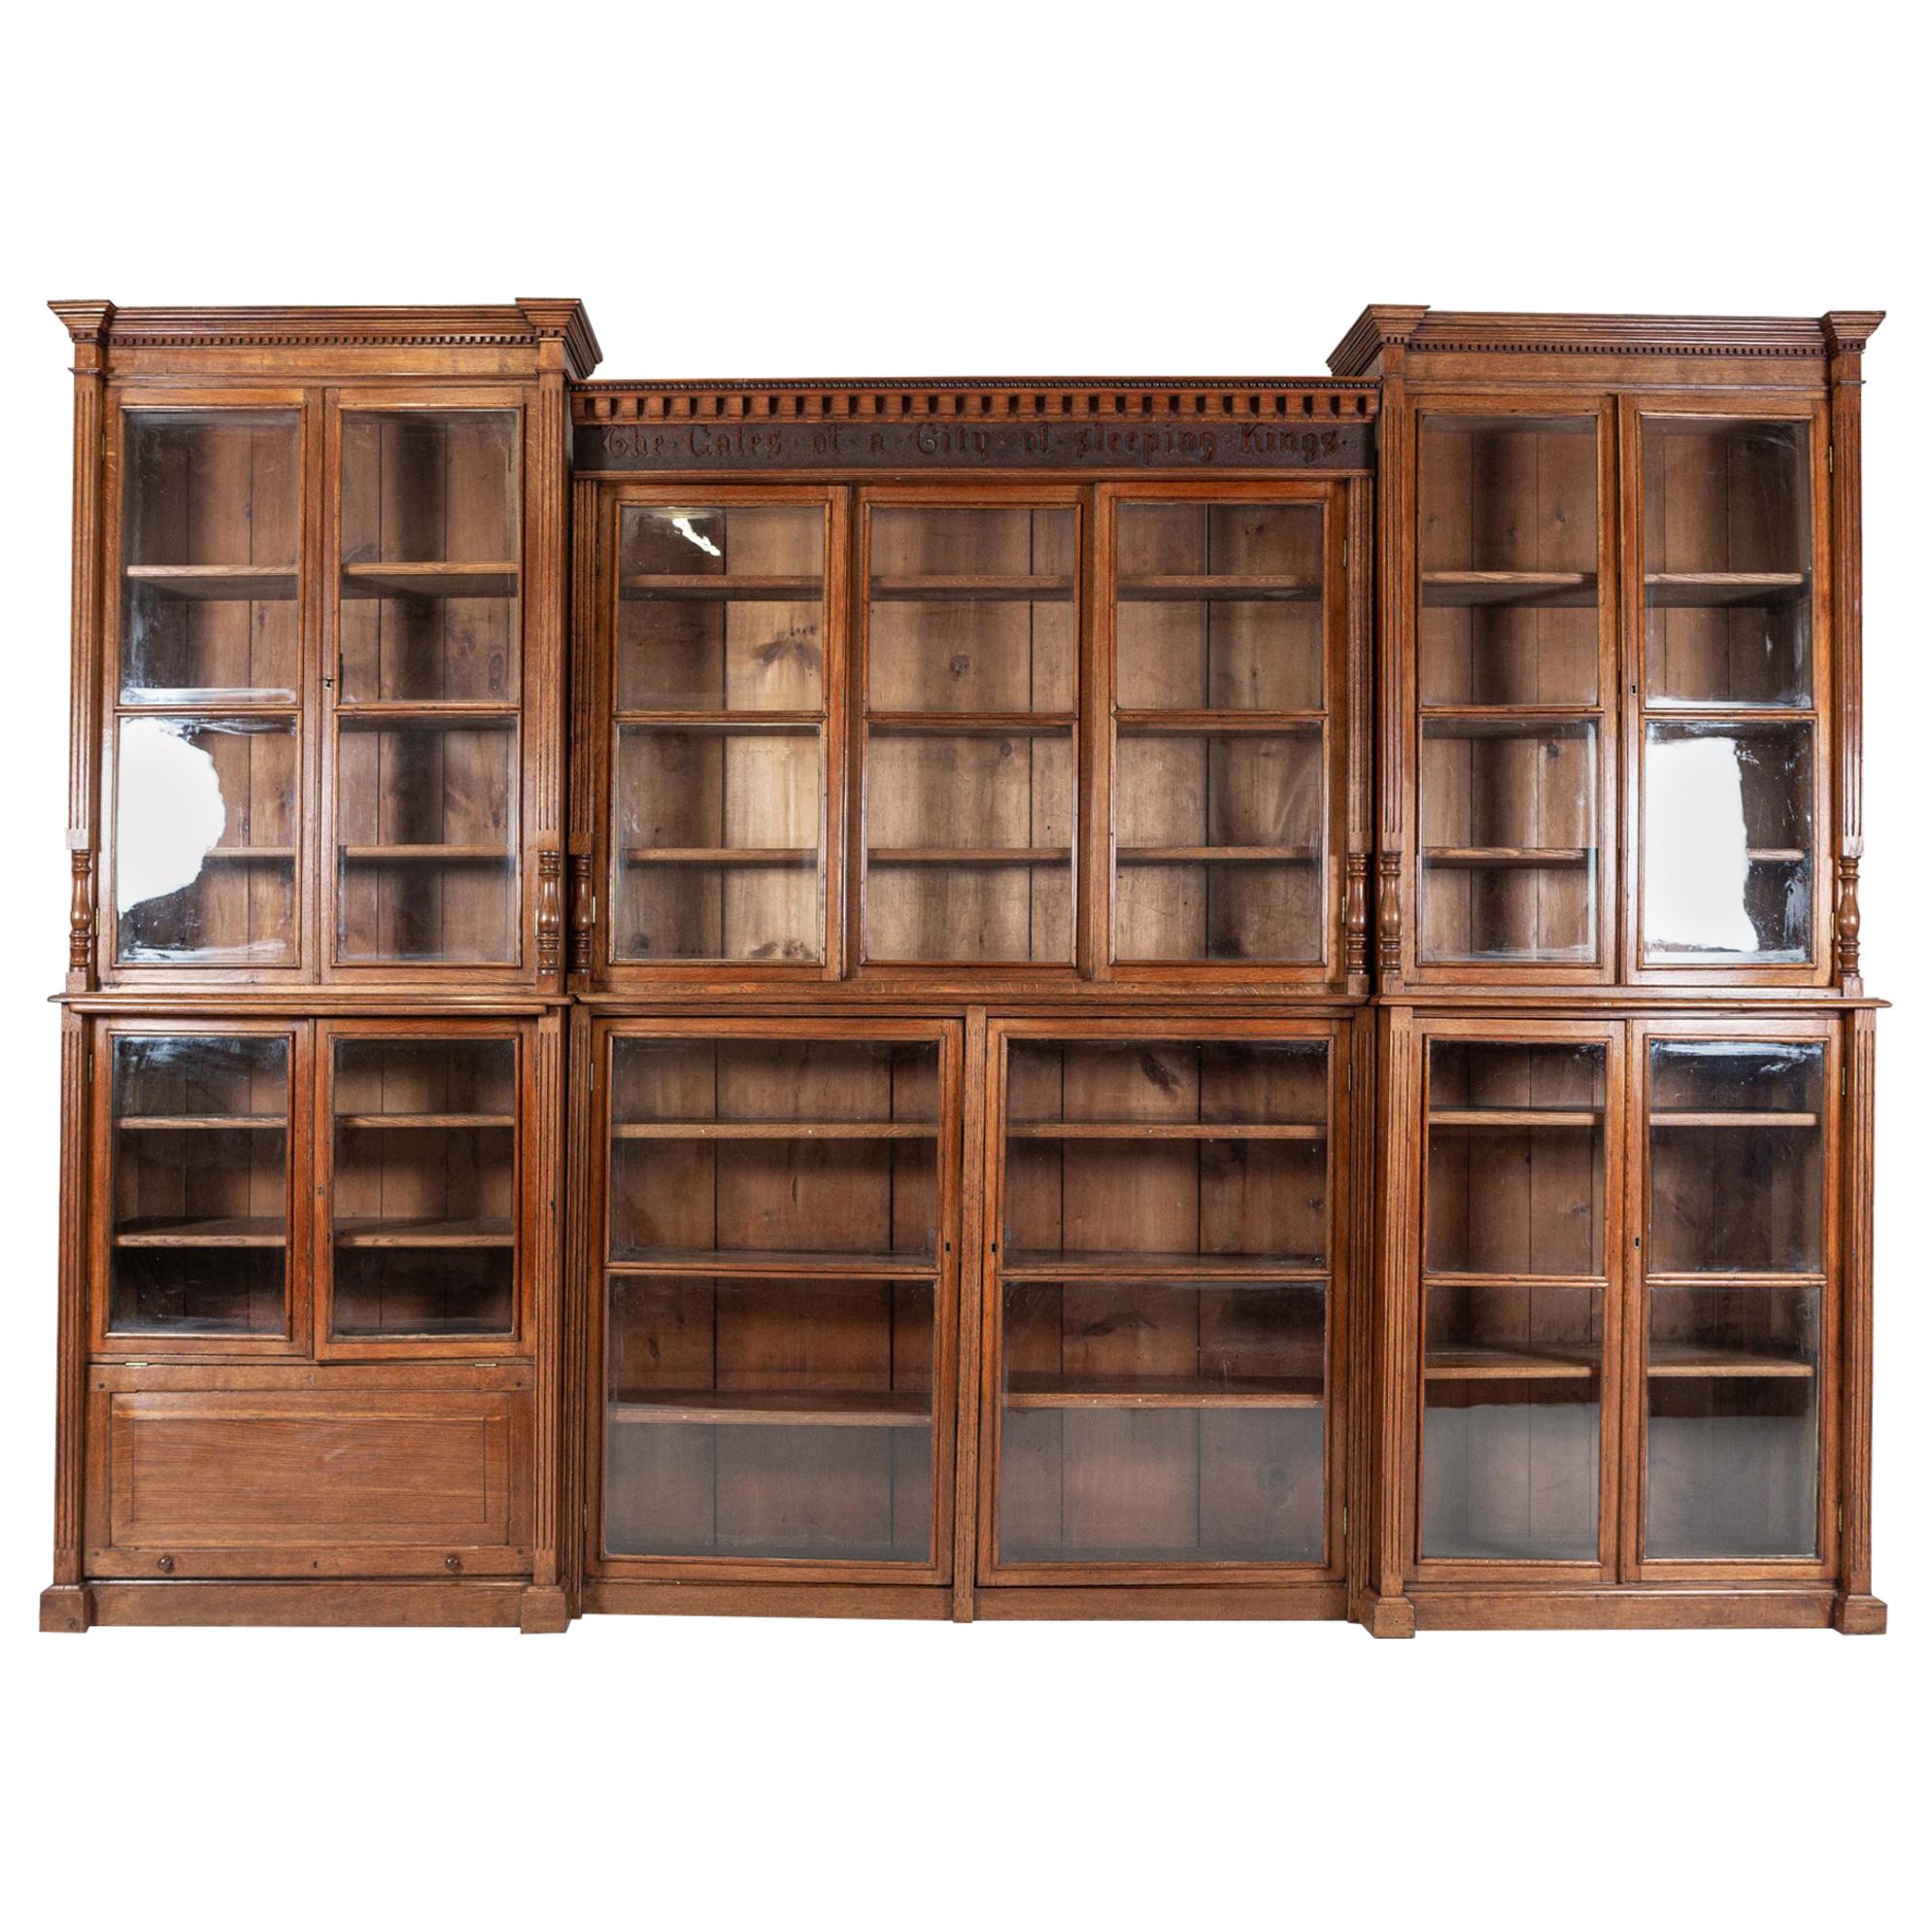 19thc Monumental English Architectural Glazed Oak Bookcase